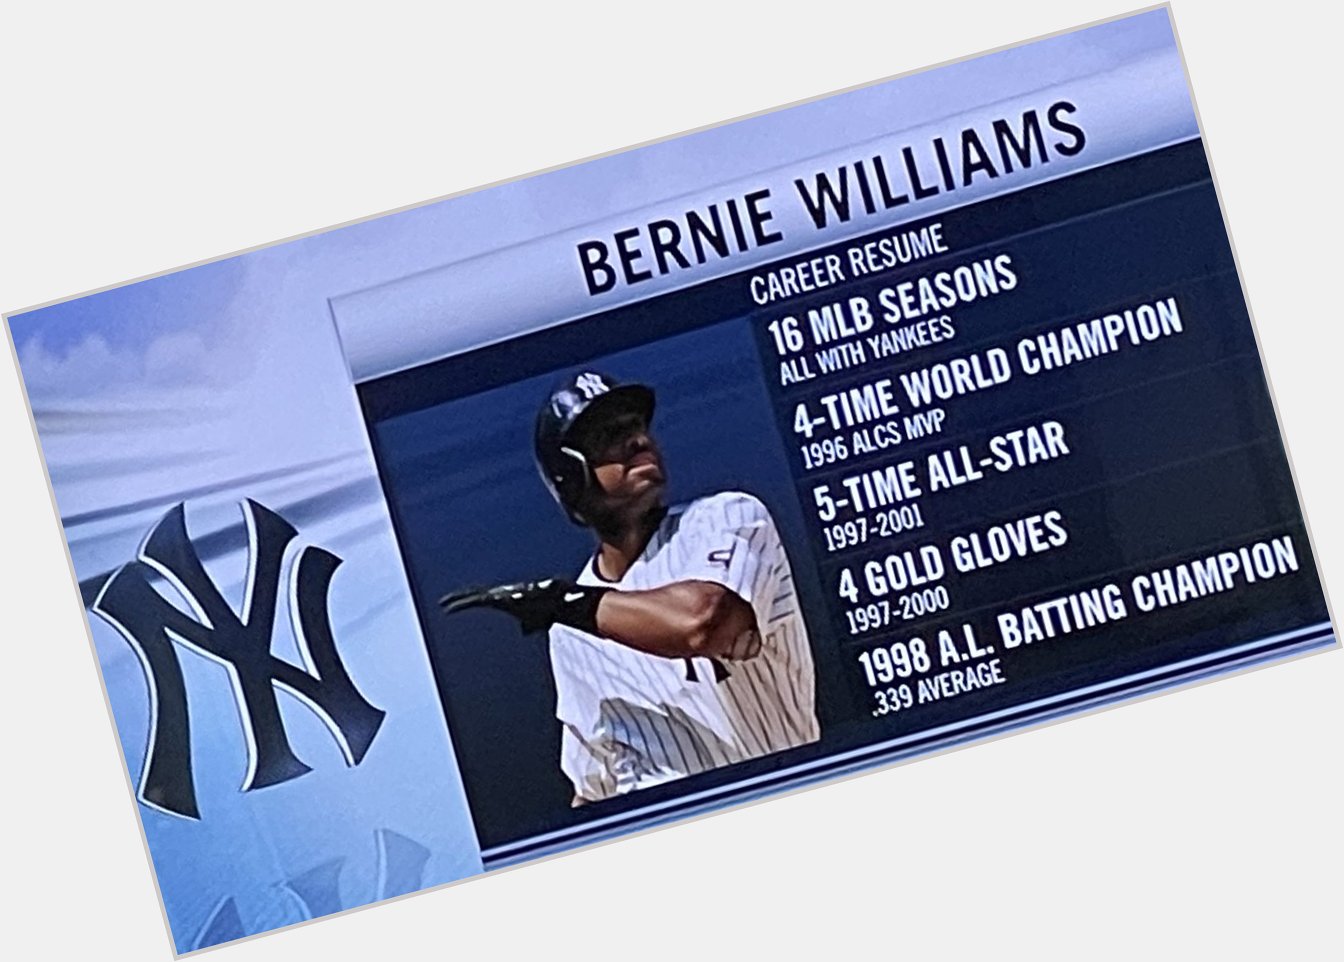 Happy birthday to Yankees legend Bernie Williams! 